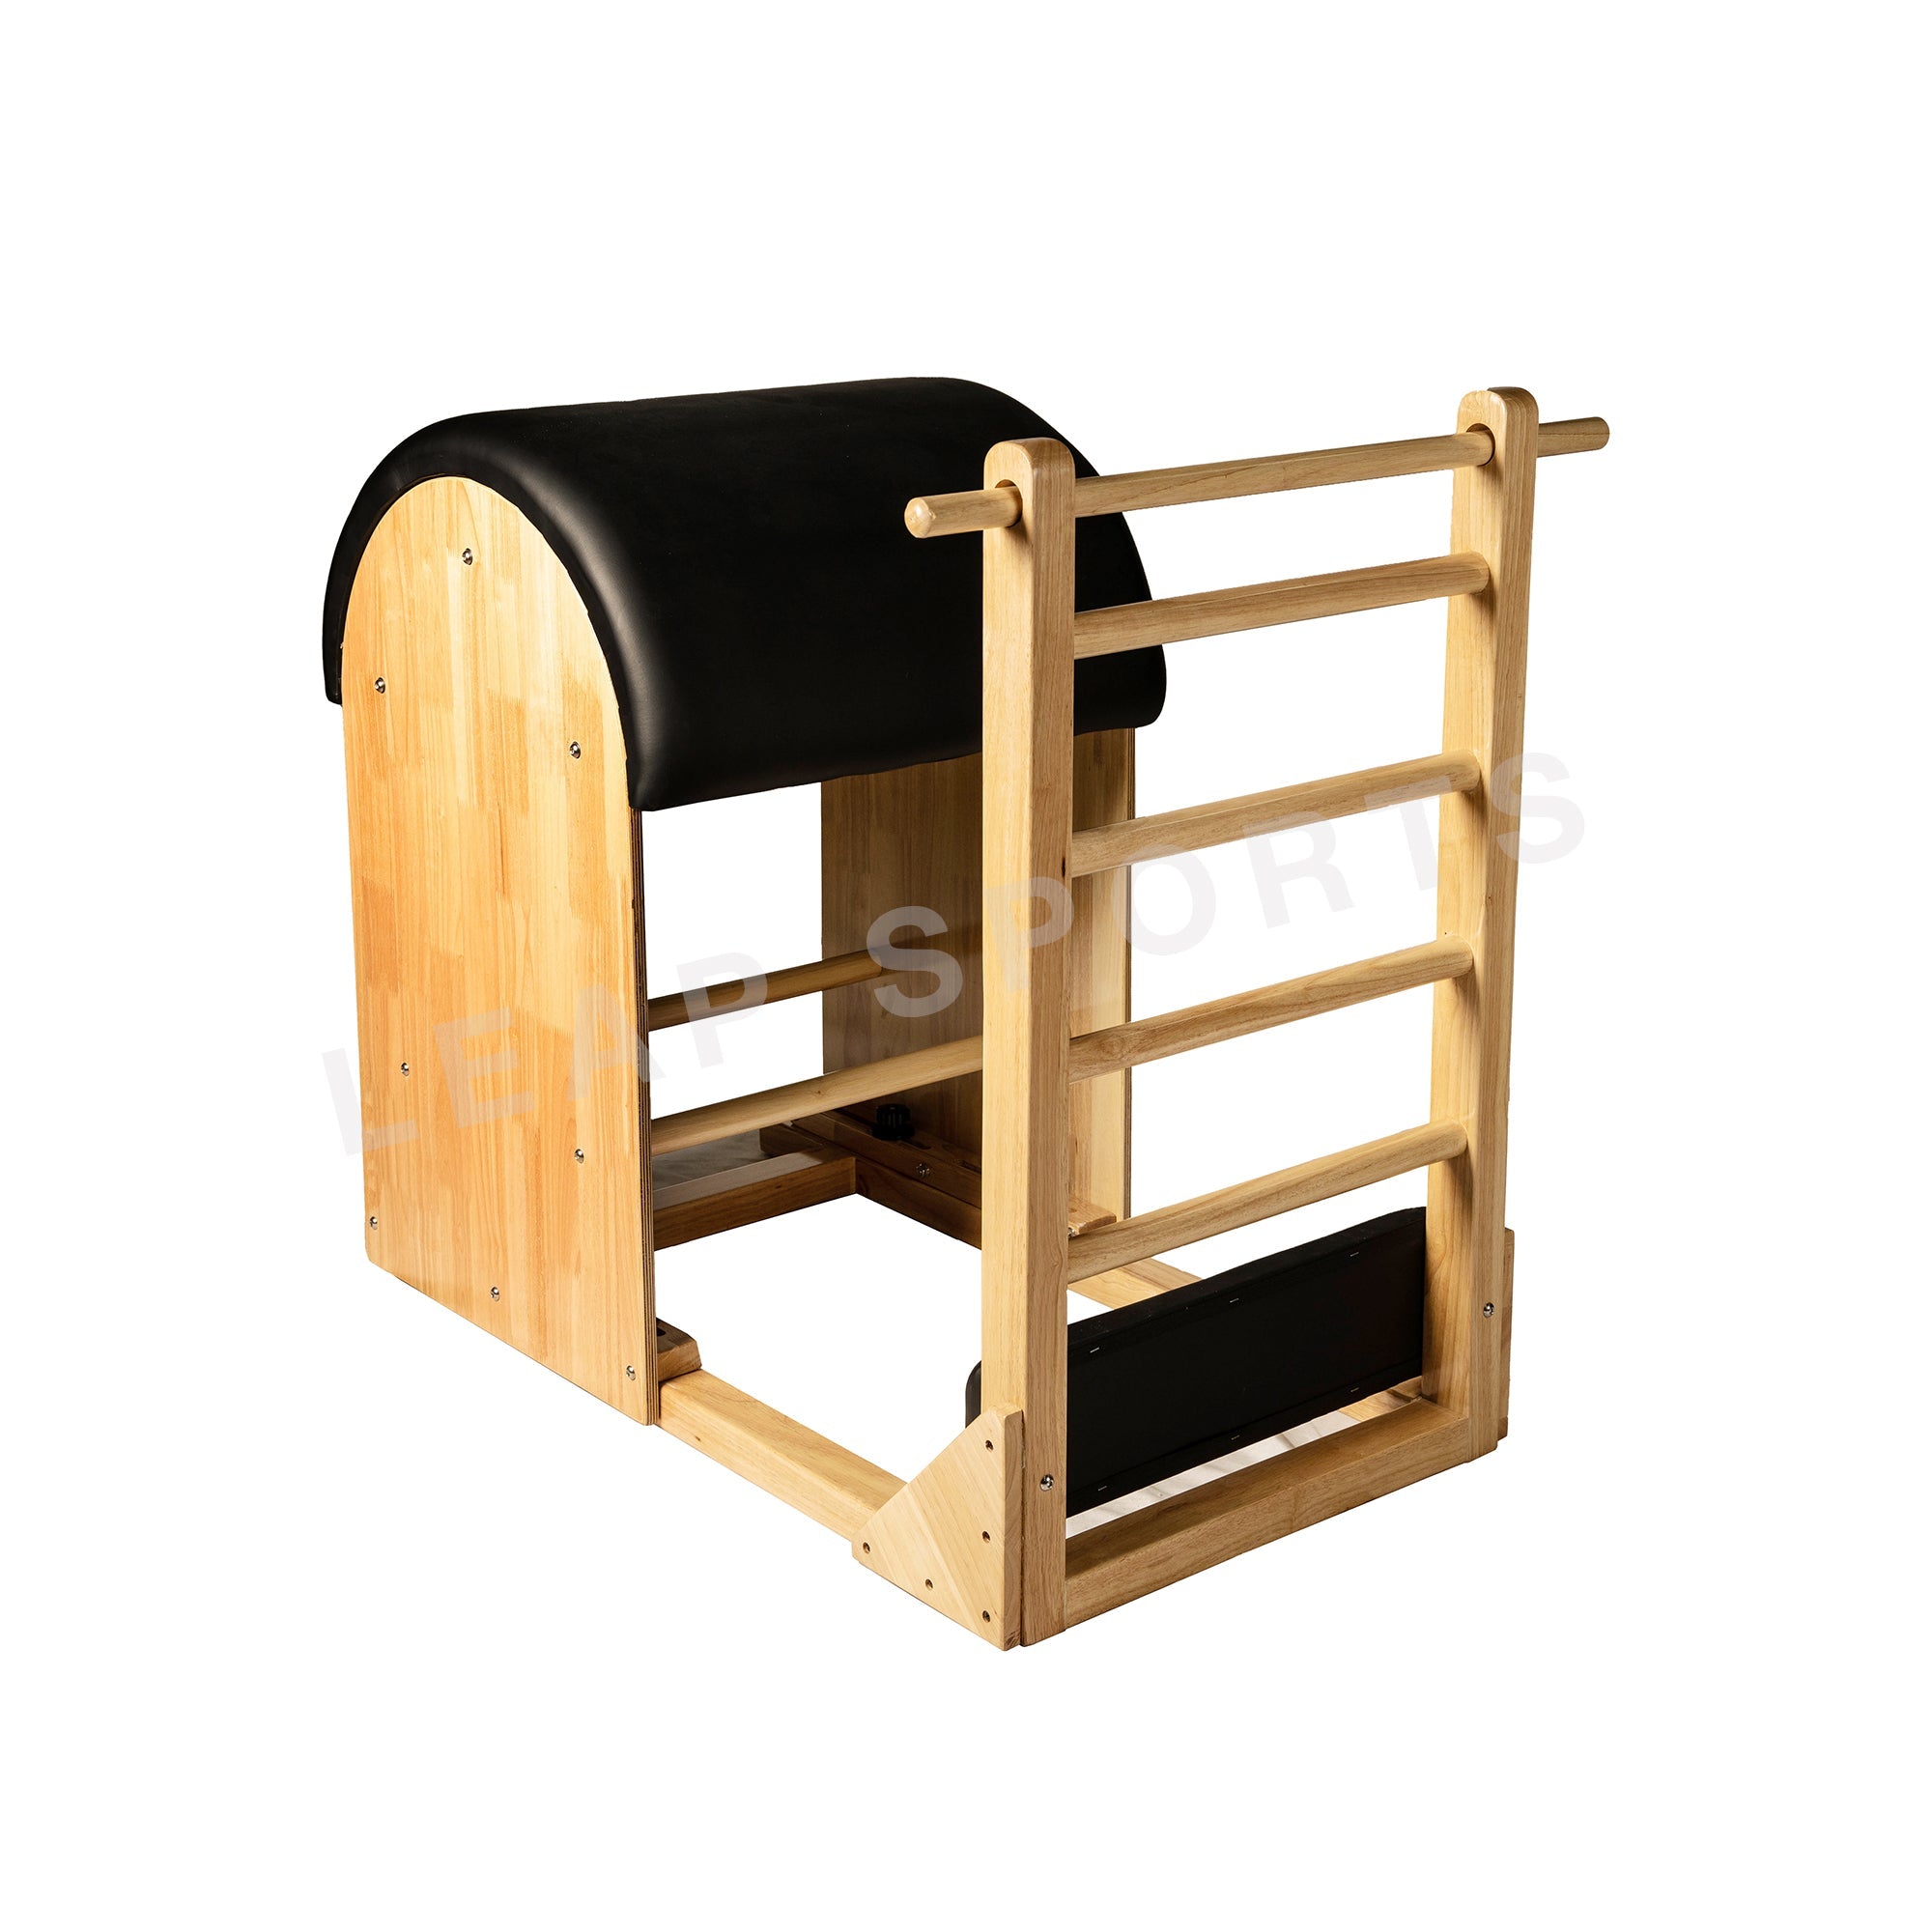 Small Arc Pilates Yoga Exercise Equipment - China Ladder Barrels